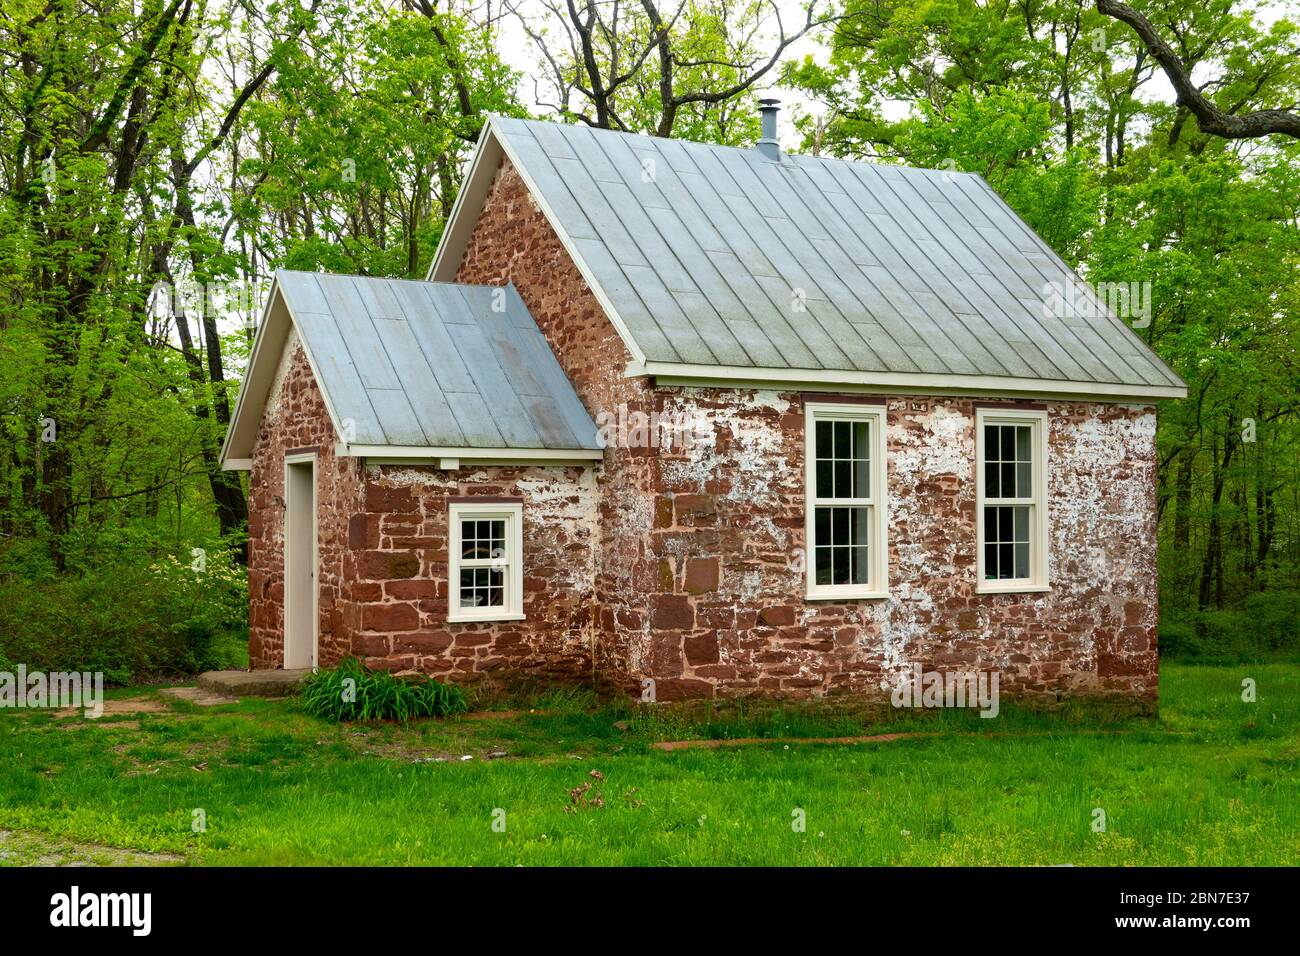 USA Maryland MD Poolesville Seneca one room schoolhouse historic 1800s Stock Photo